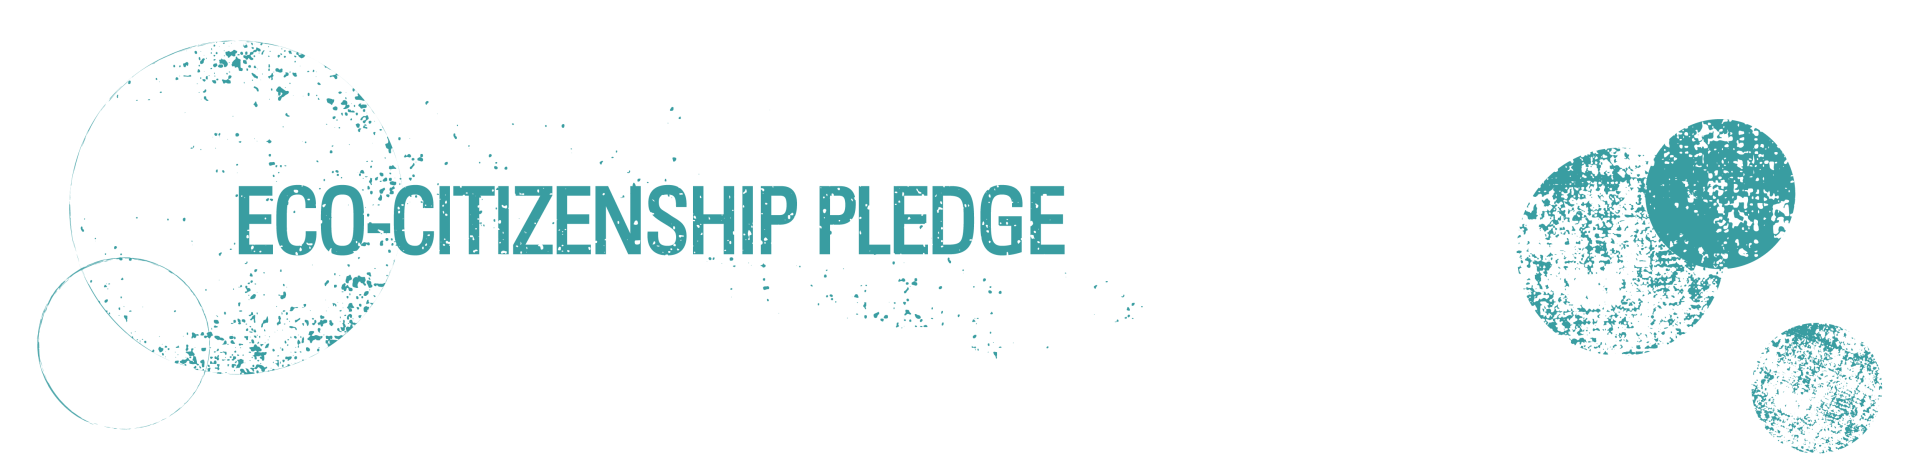 Eco-citizenship pledge